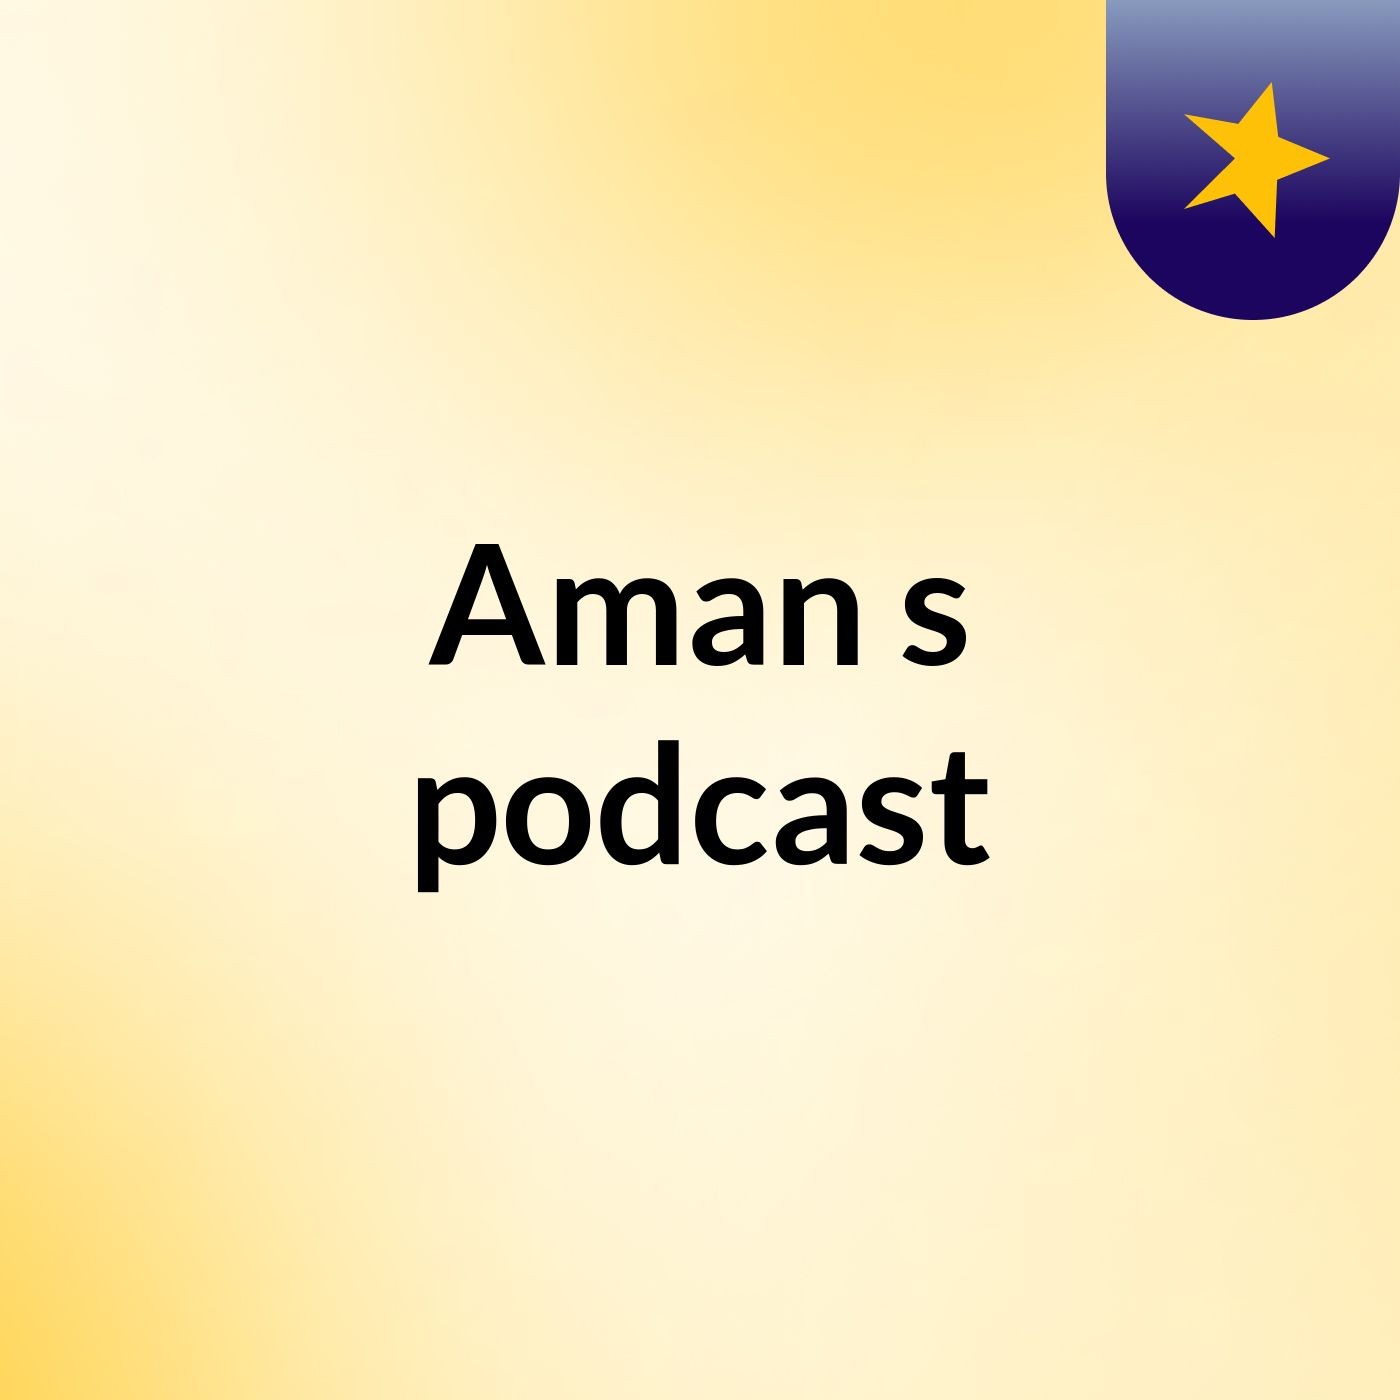 Aman's podcast